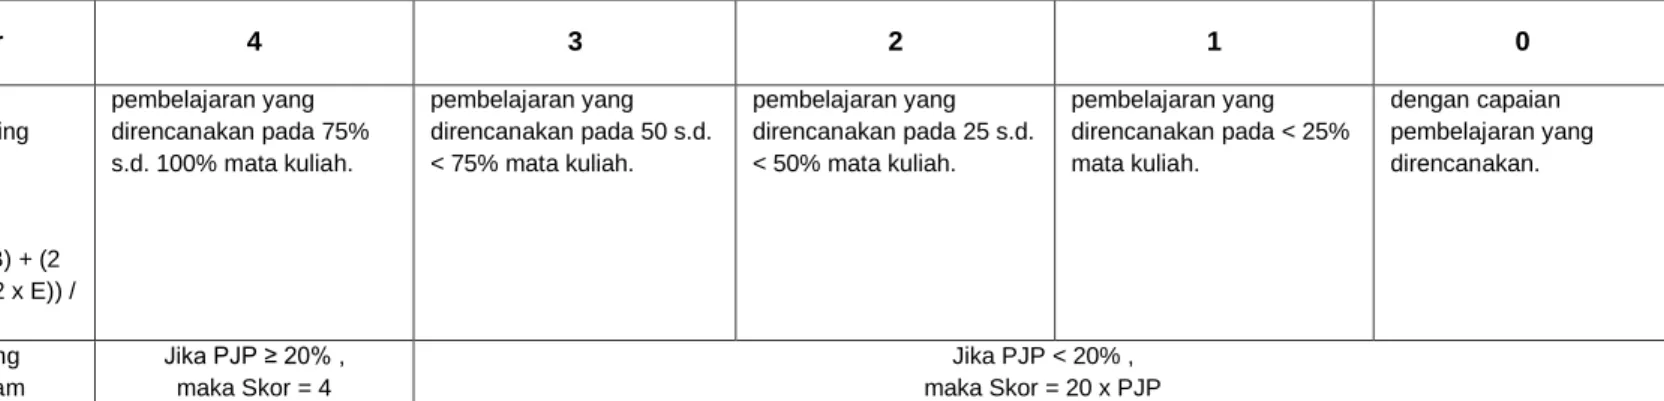 Tabel 5.a LKPS 